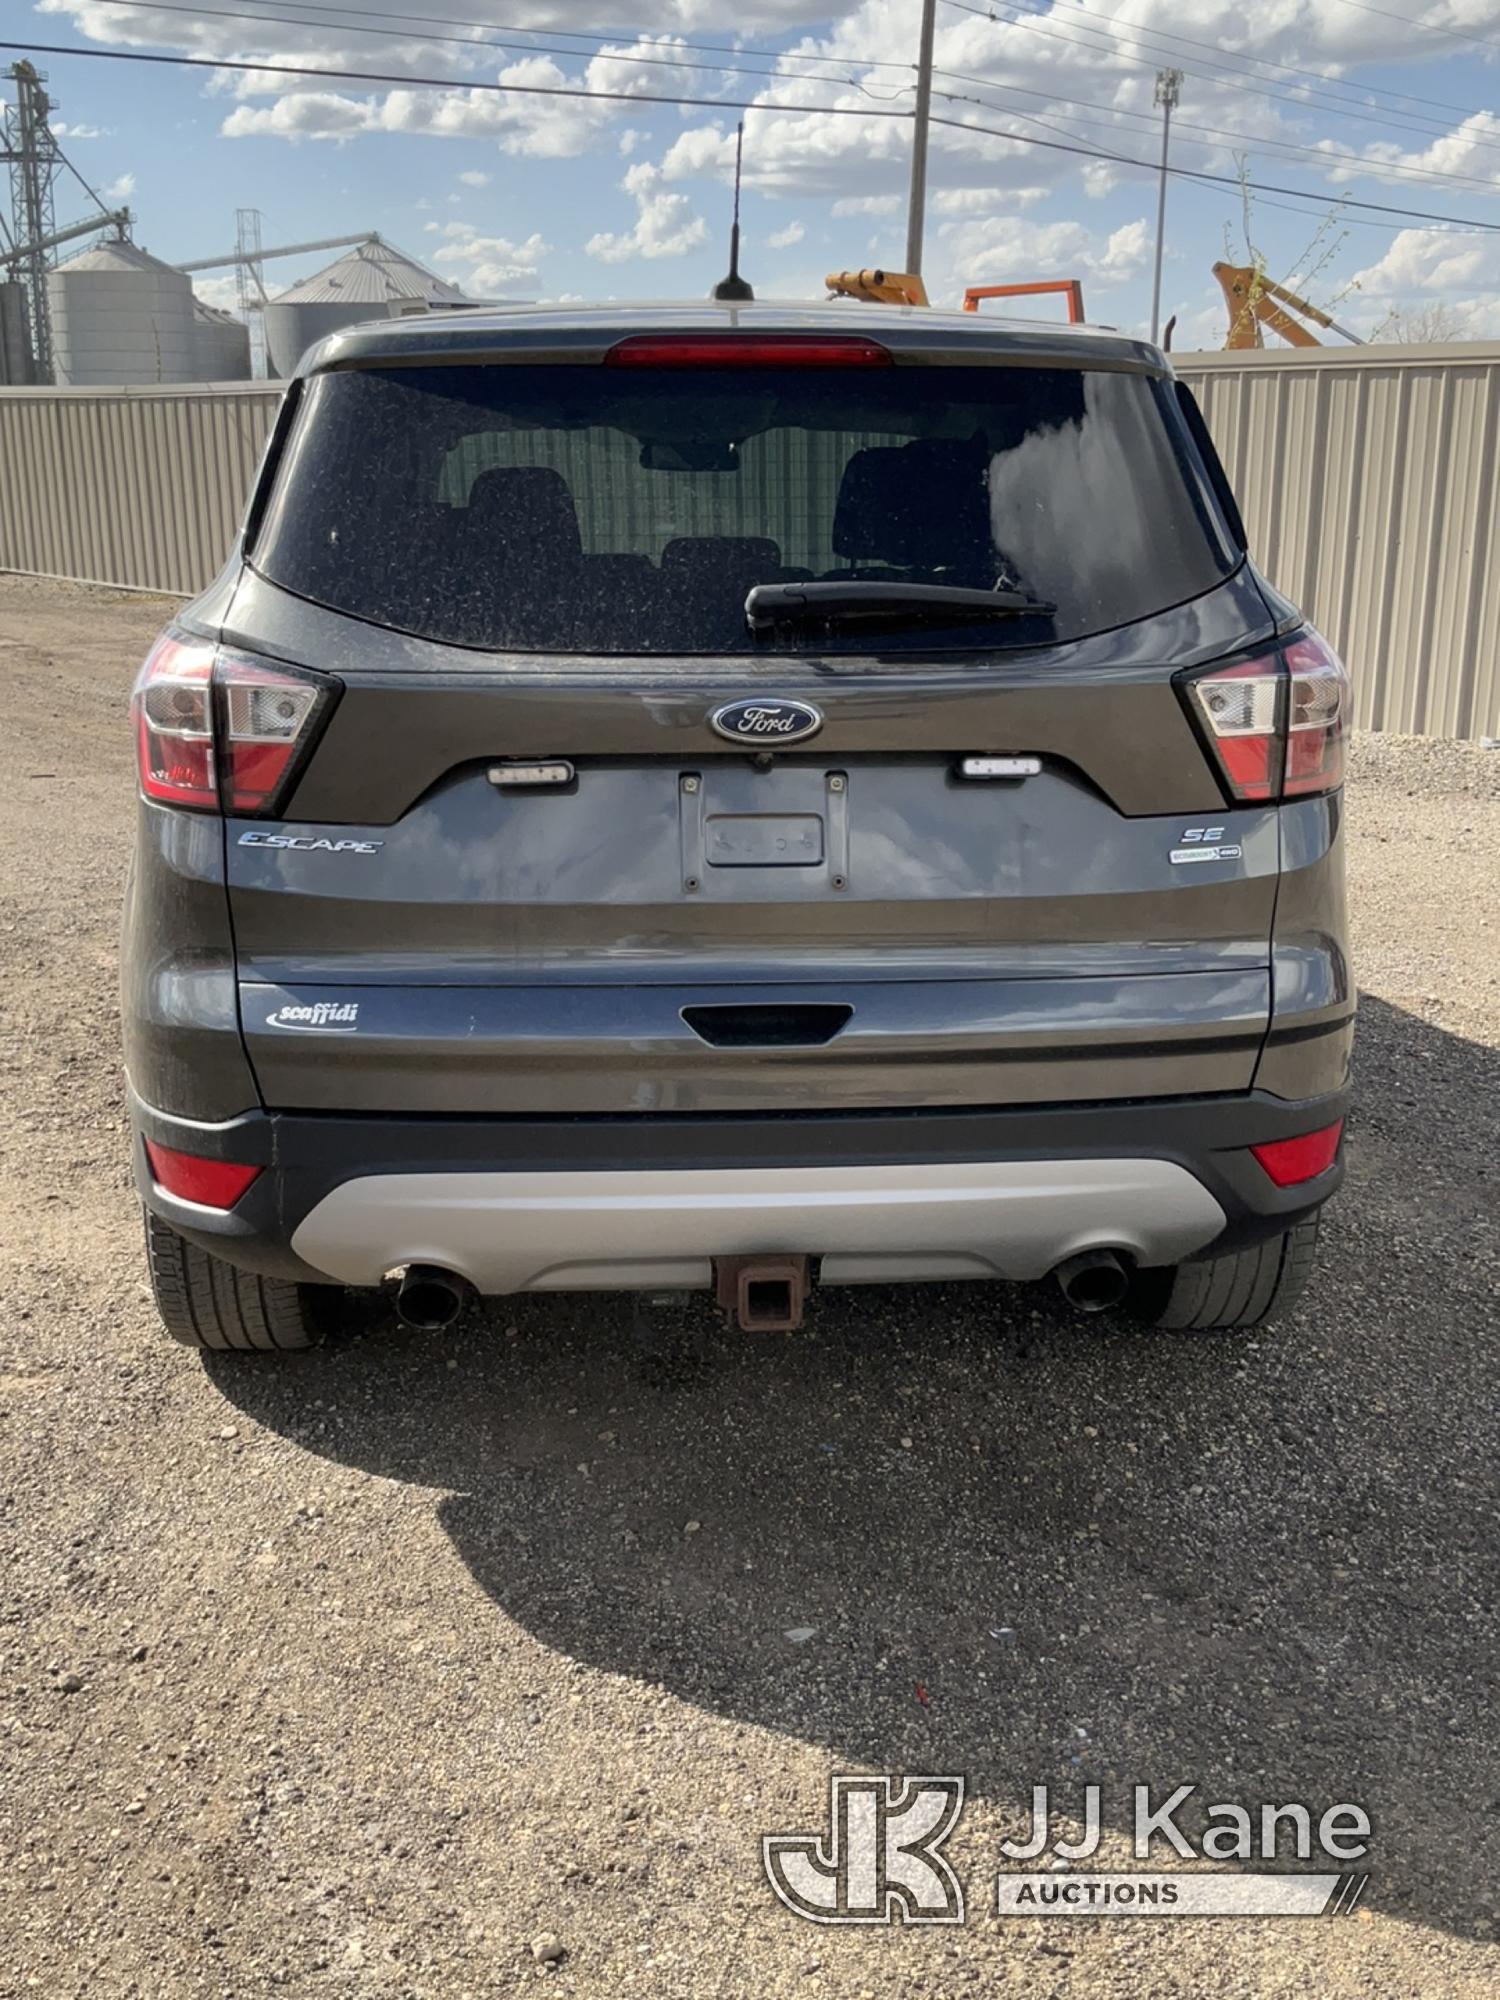 (South Beloit, IL) 2017 Ford Escape 4x4 4-Door Sport Utility Vehicle Runs & Moves